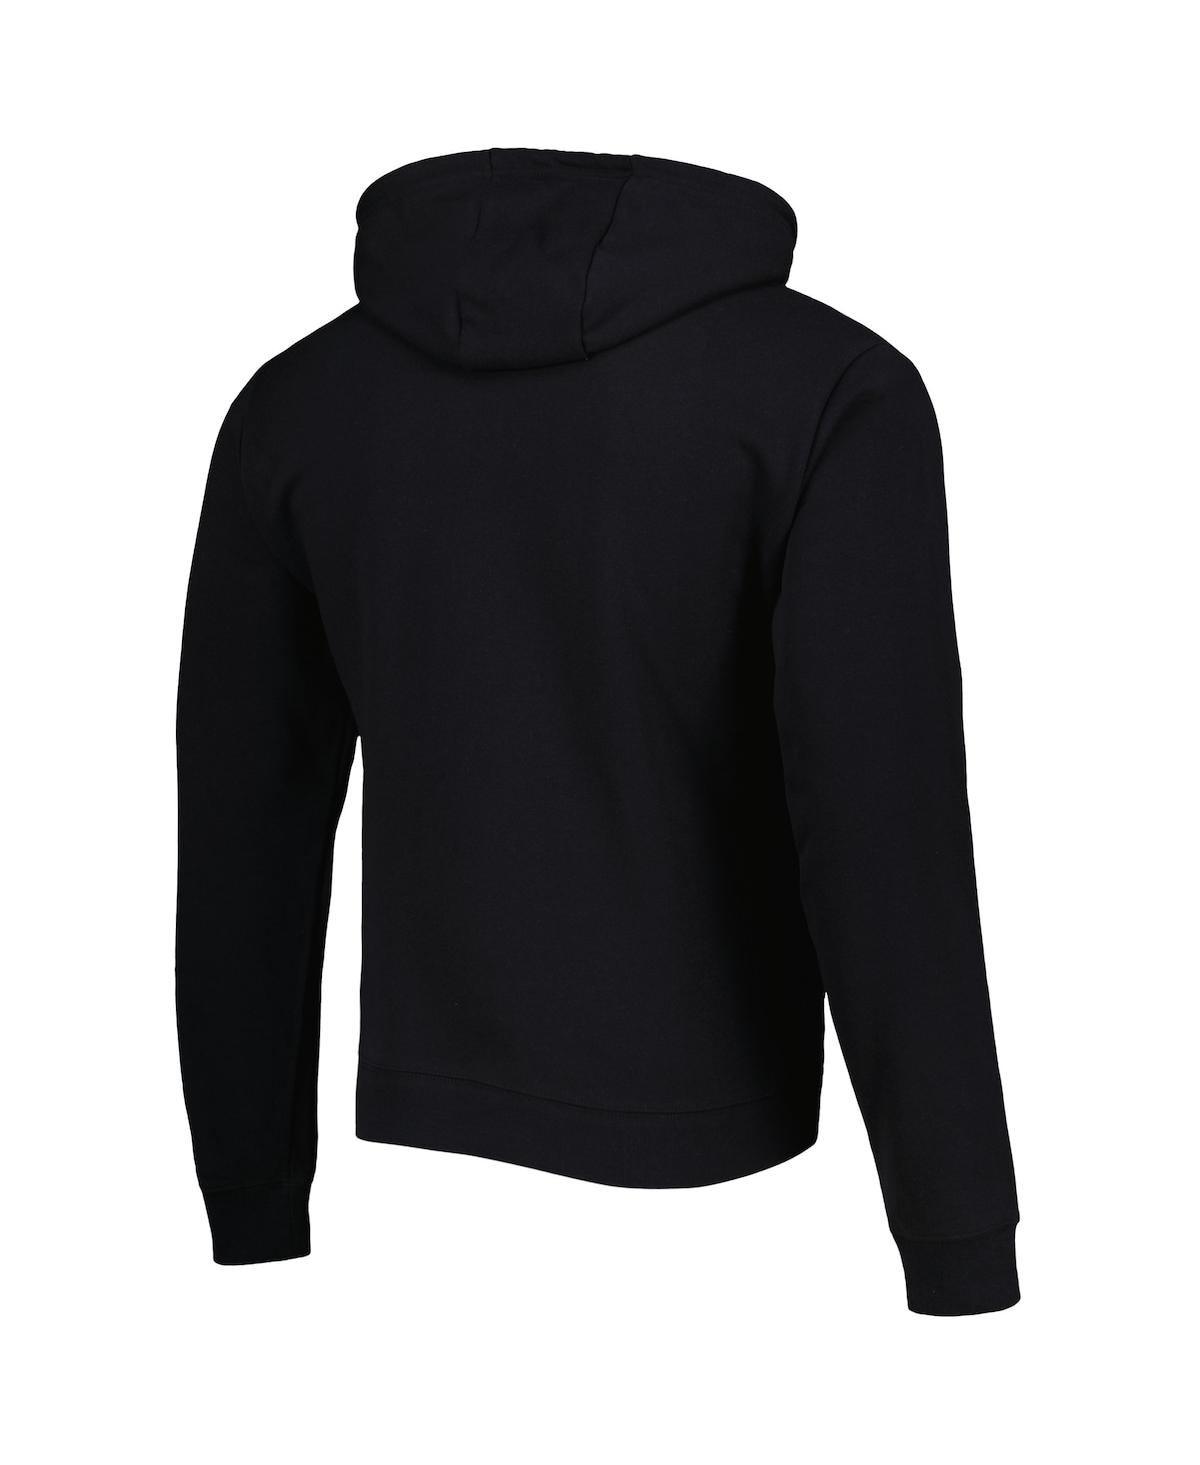 Shop League Collegiate Wear Men's  Black Army Black Knights Arch Essential Fleece Pullover Hoodie